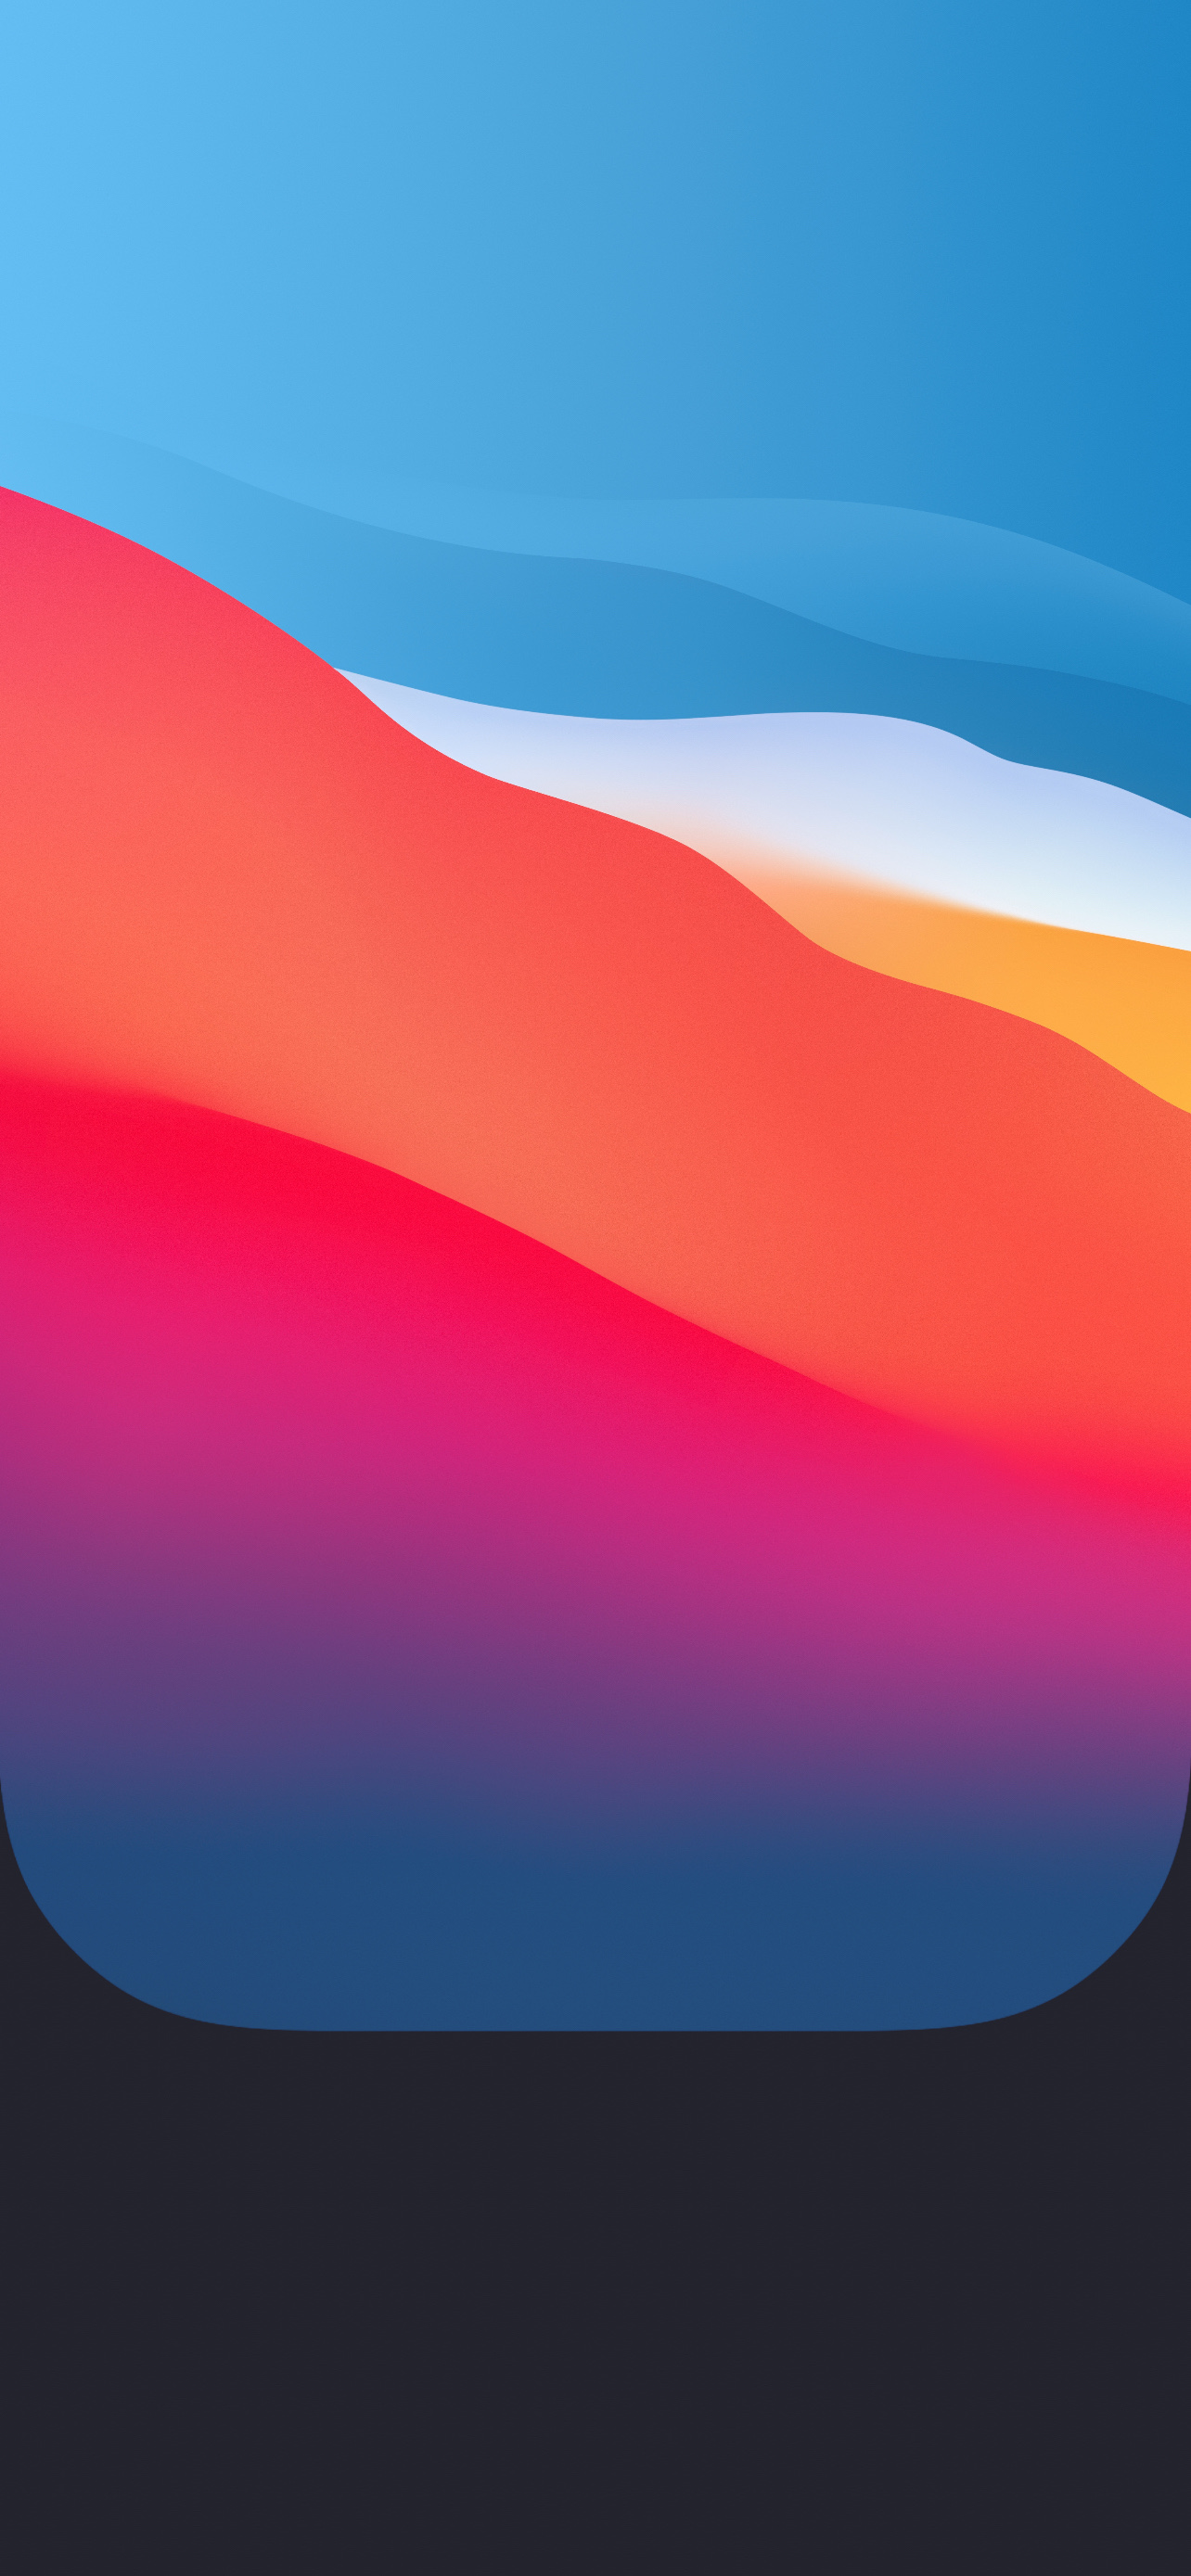 macOS Big Sur iPhone dock mod ar72014 idownloadblog